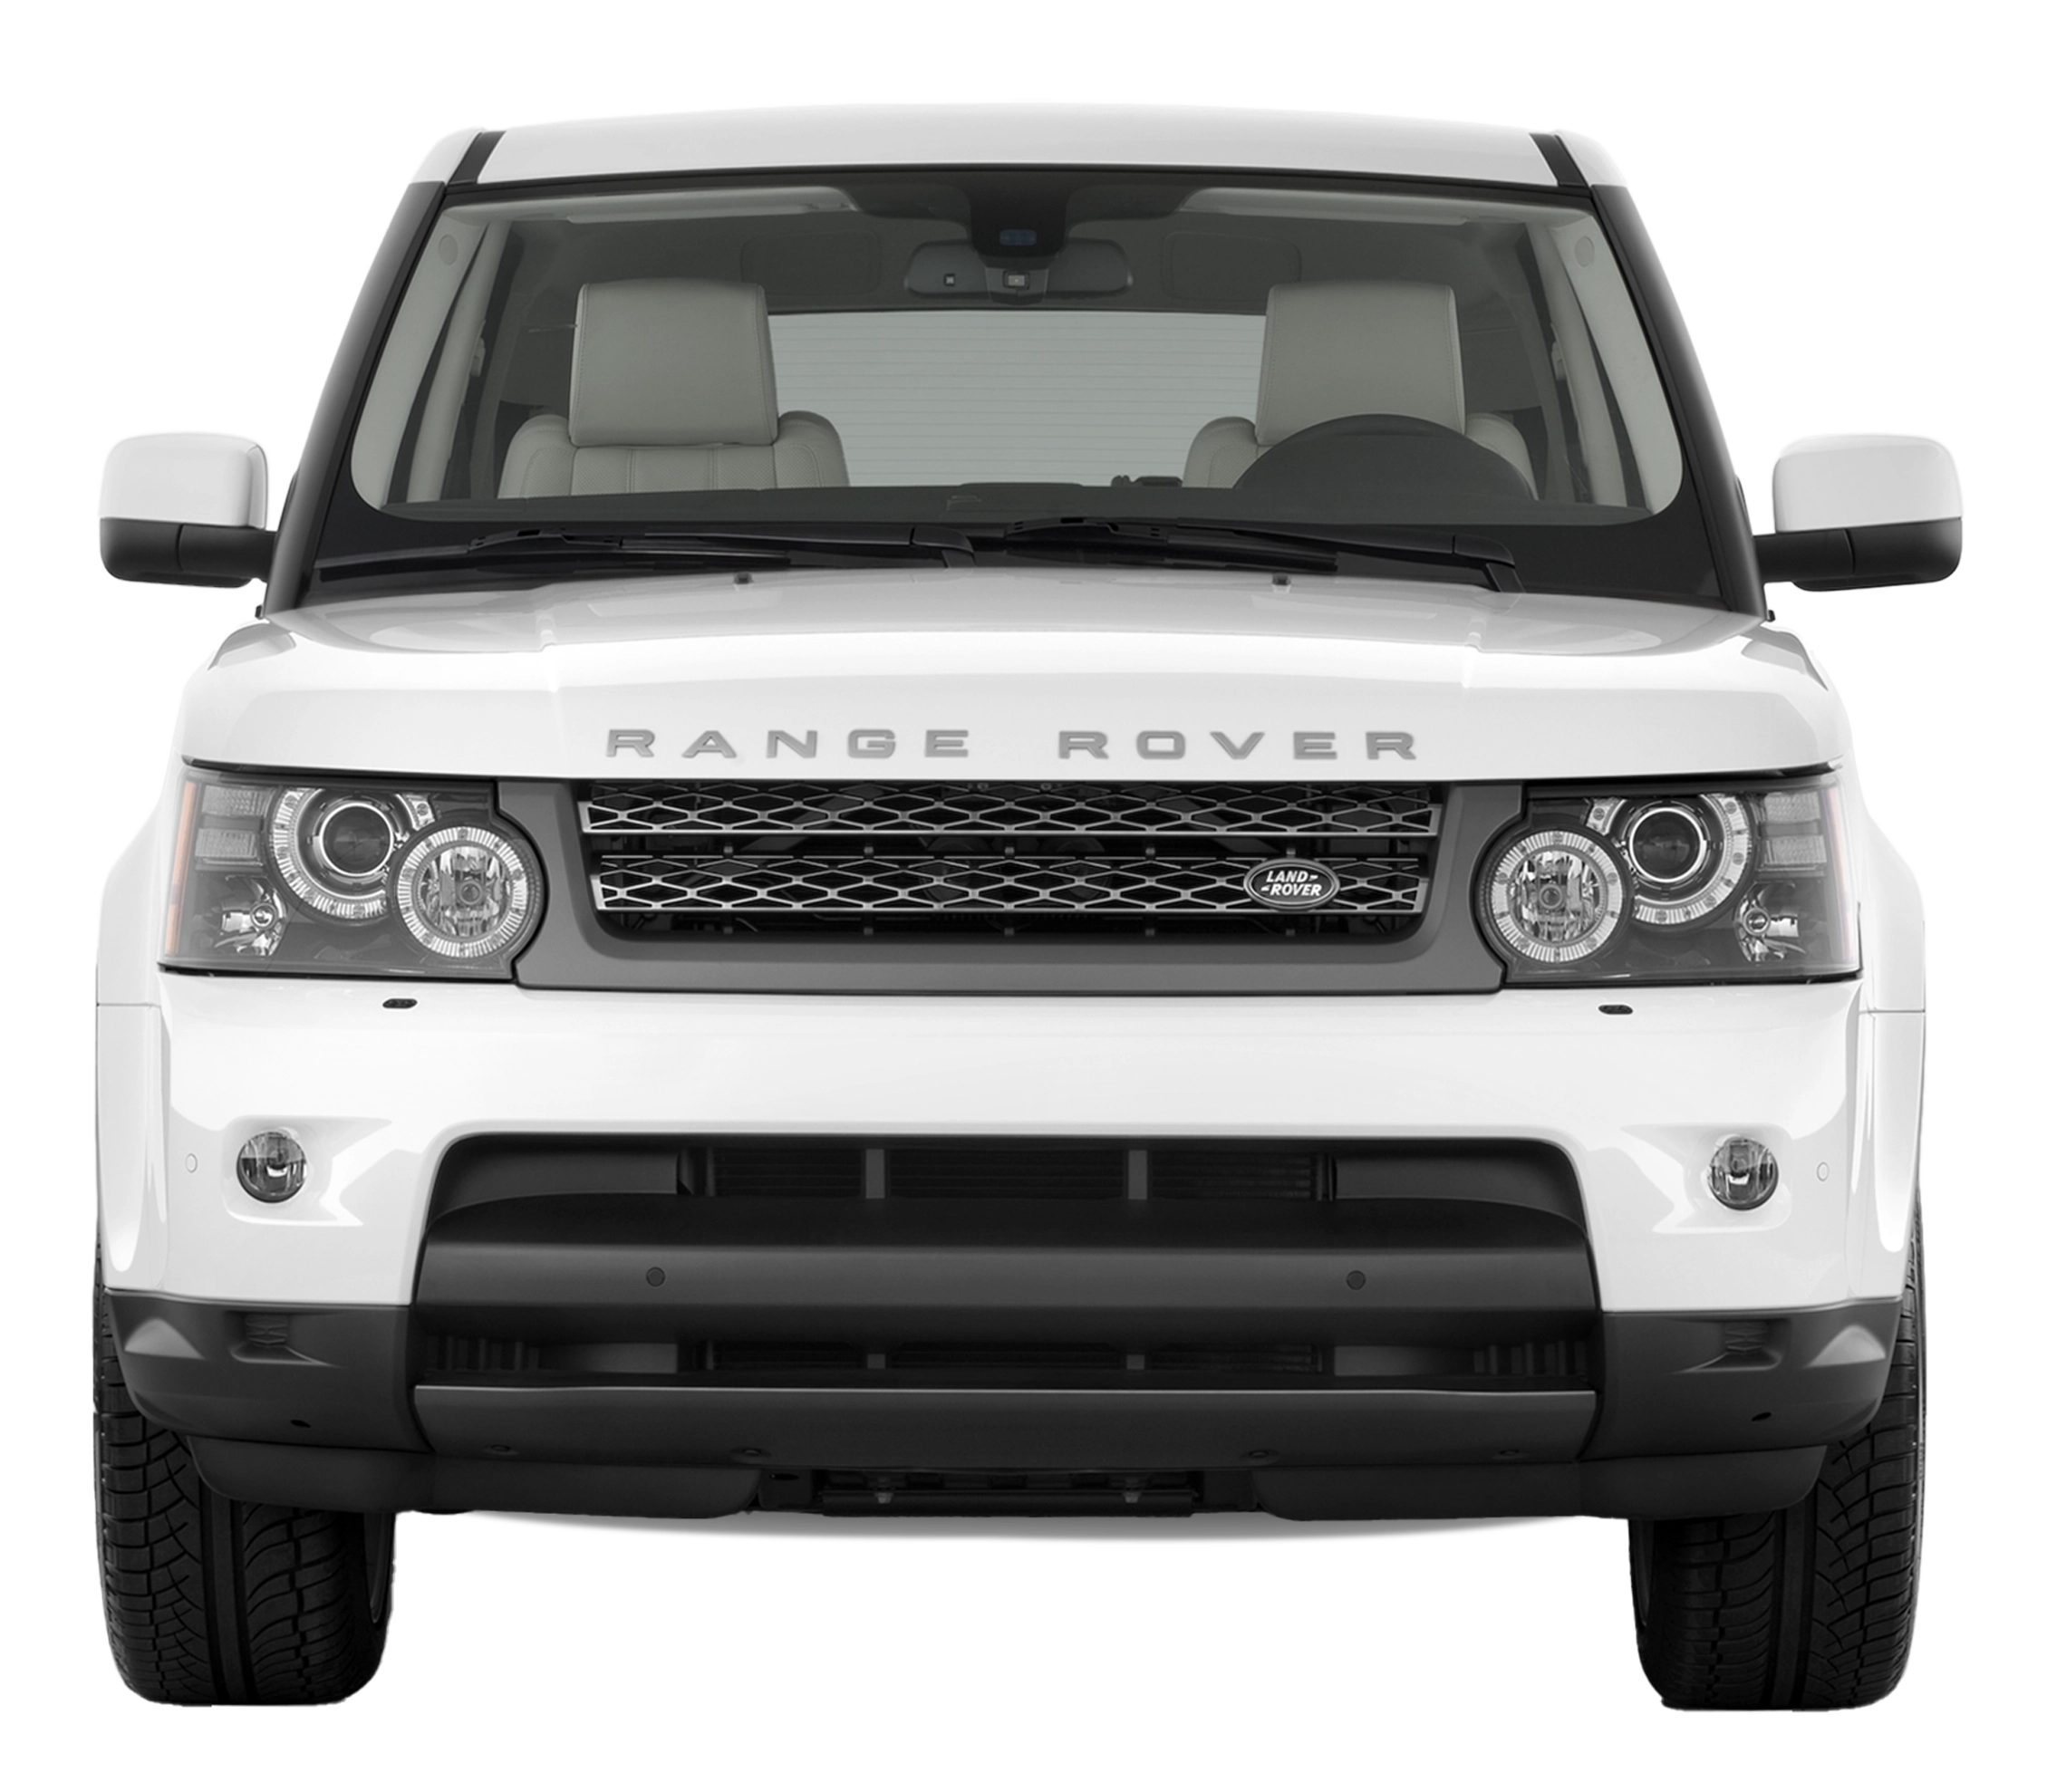 Car Storage Range Rover in White